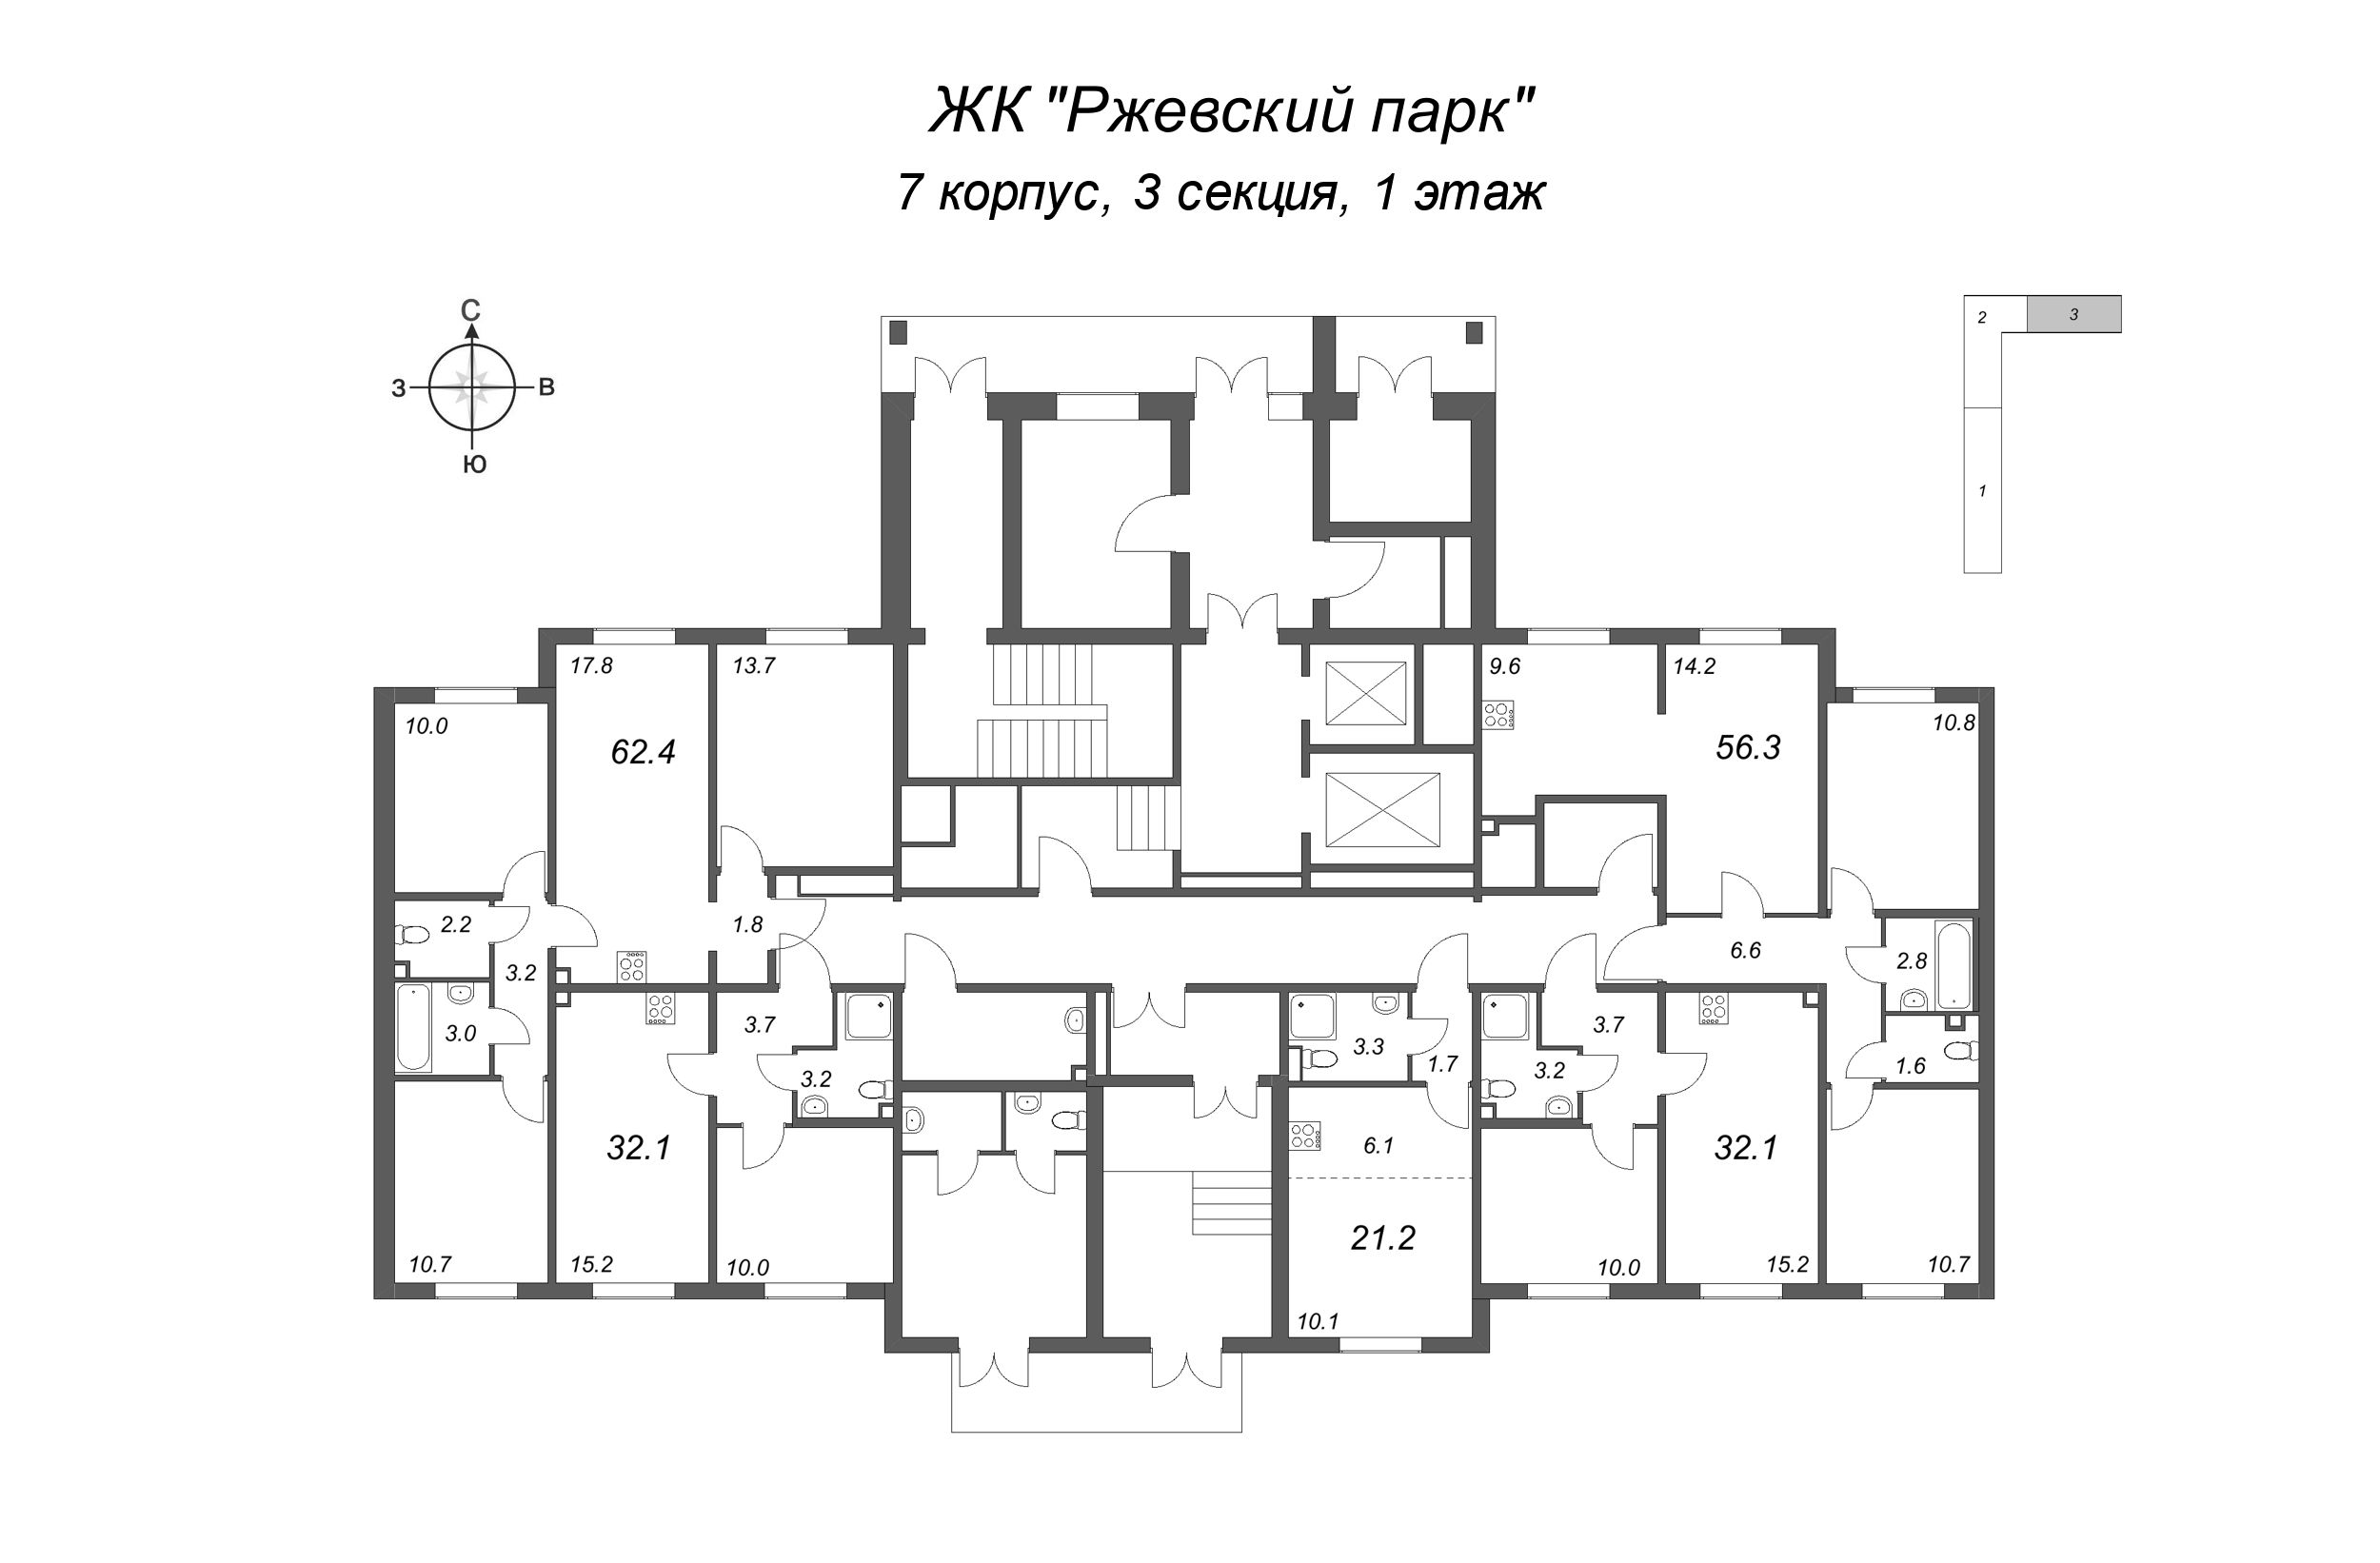 2-комнатная (Евро) квартира, 32.1 м² - планировка этажа